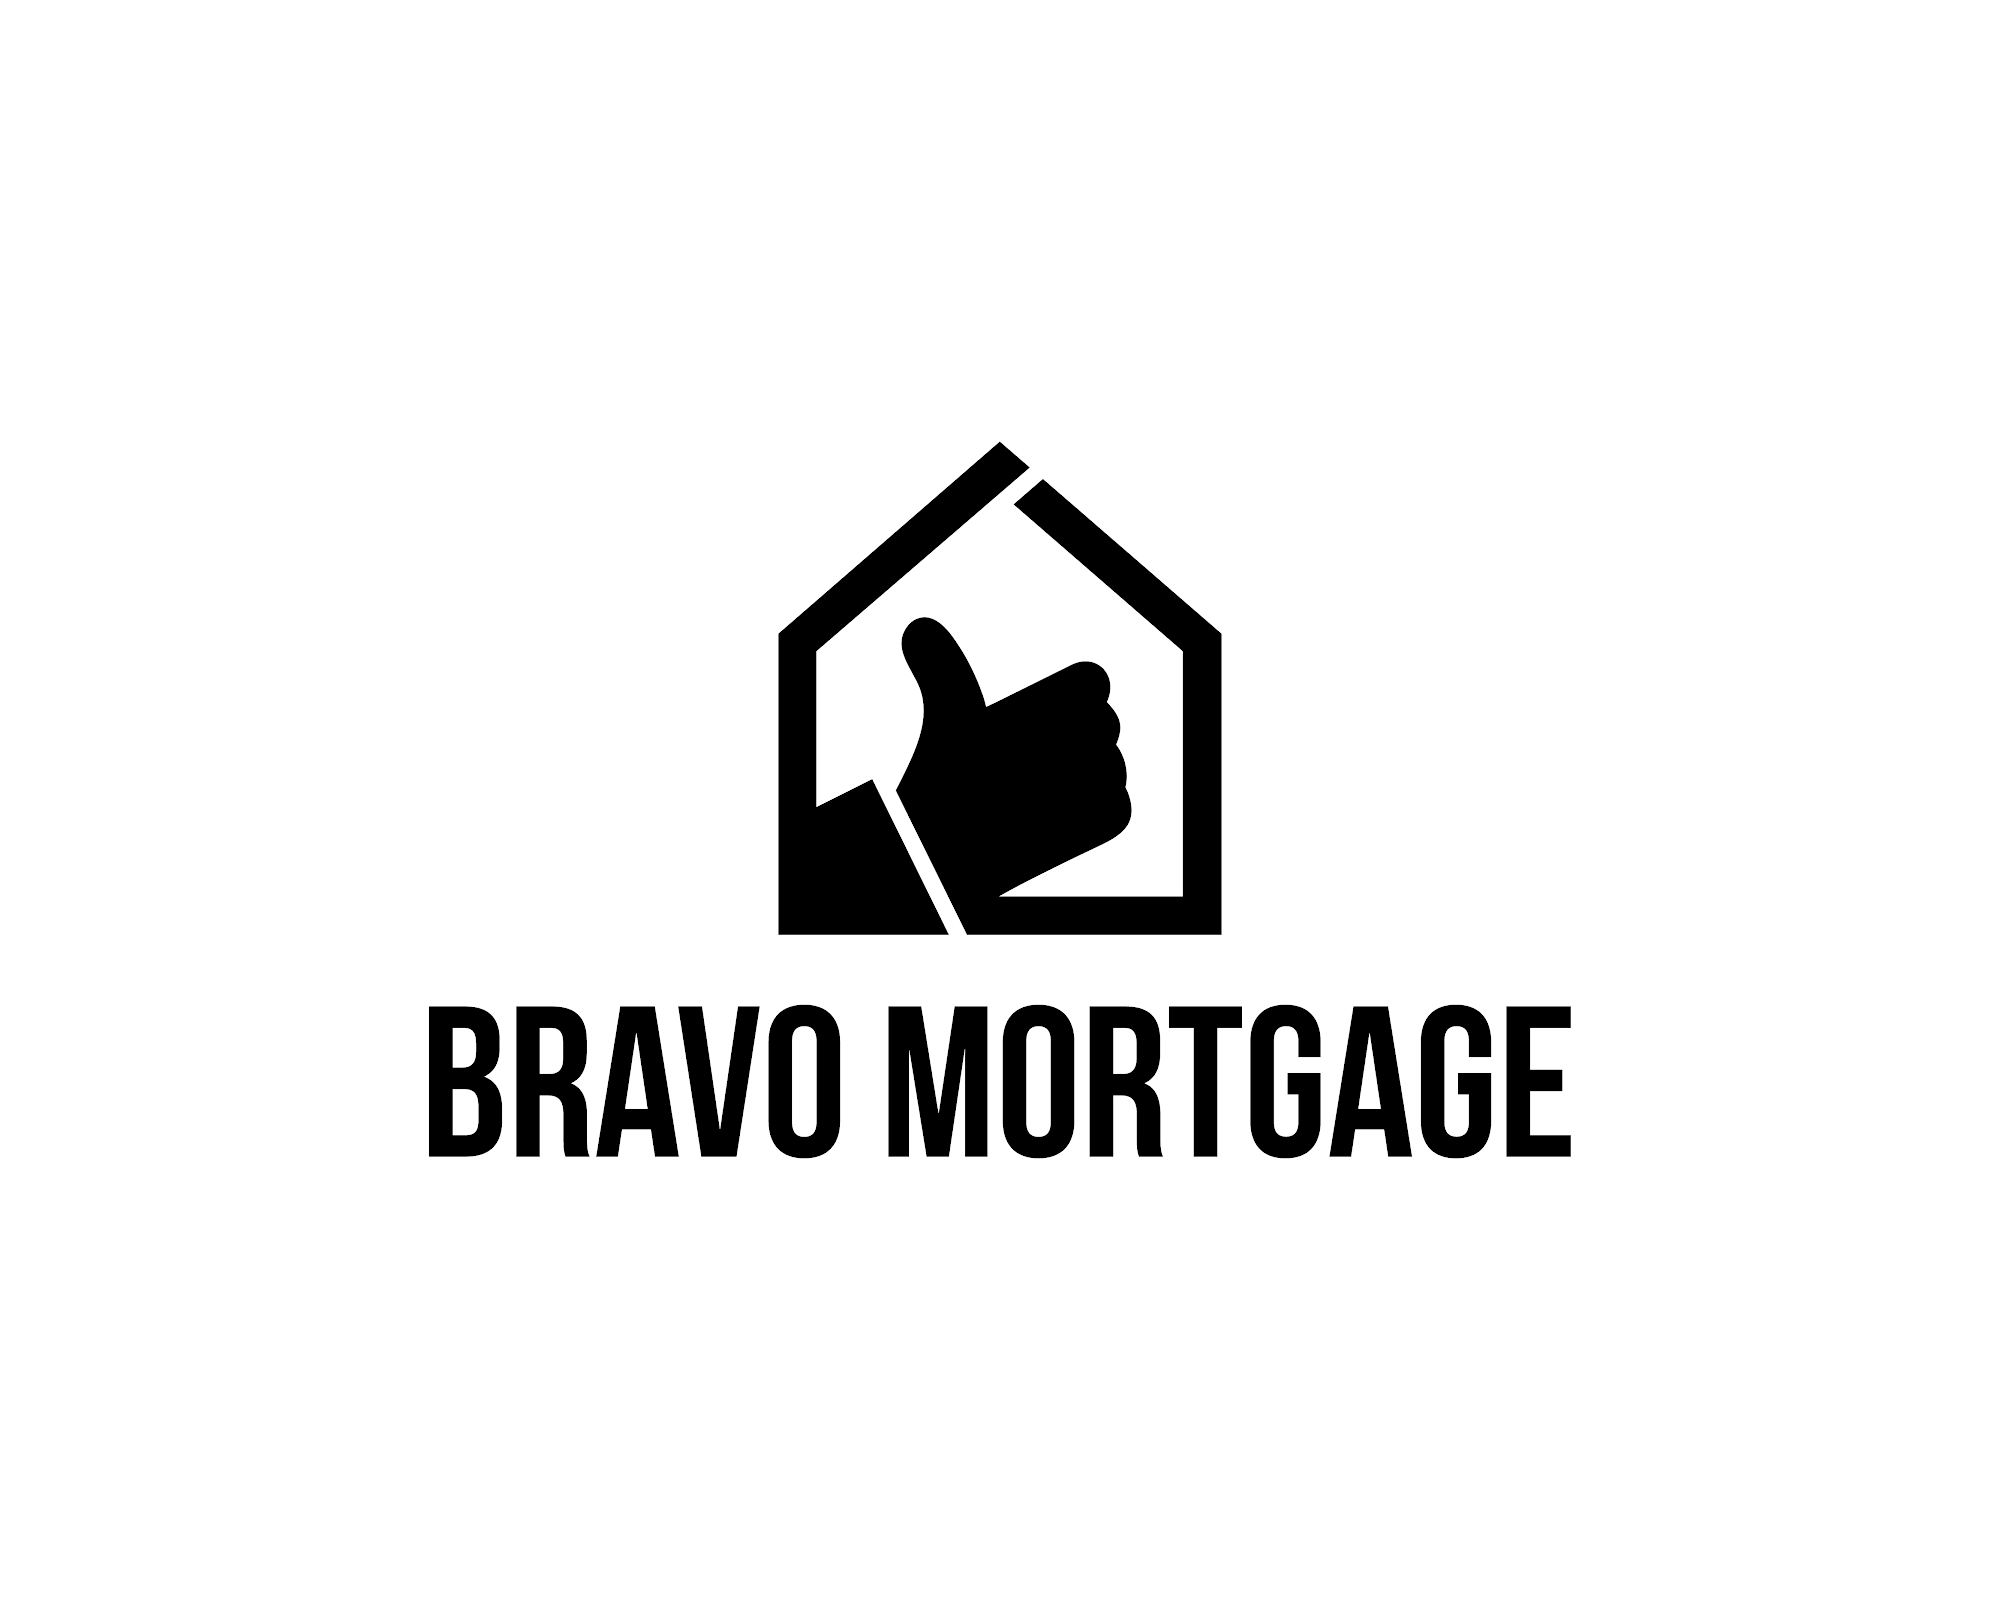 Bravo Mortgage